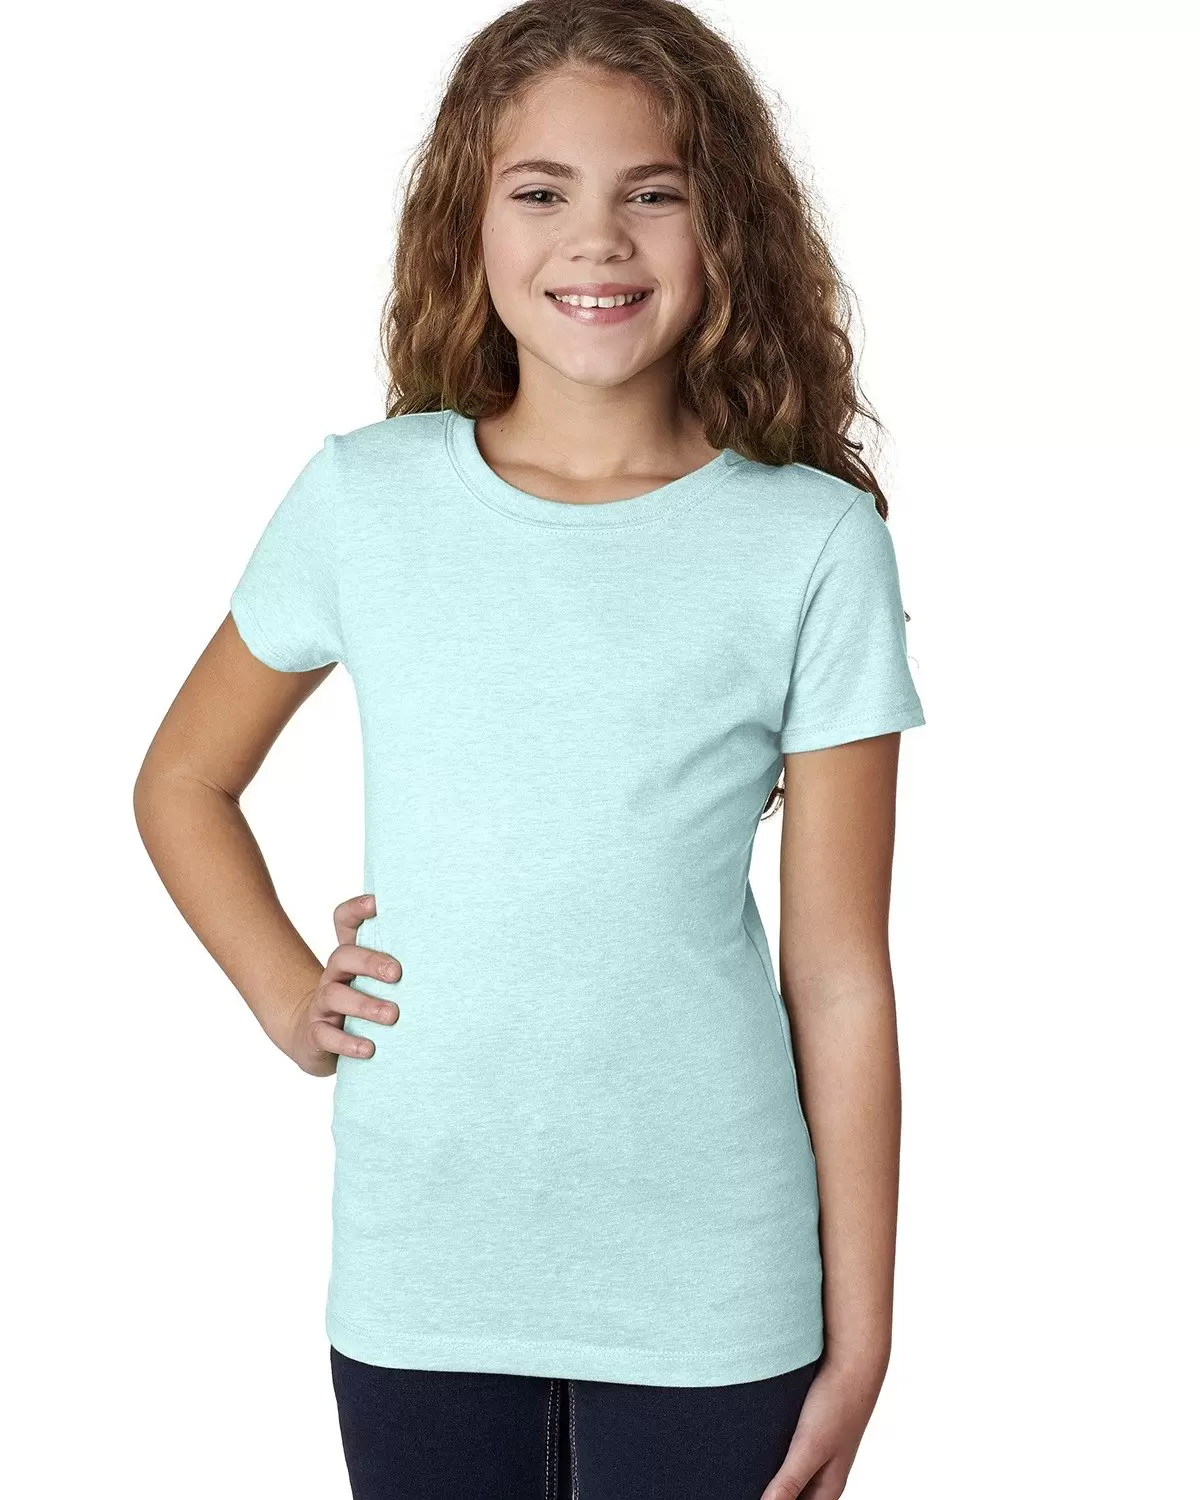 What is a CVC Fabric T-Shirt?